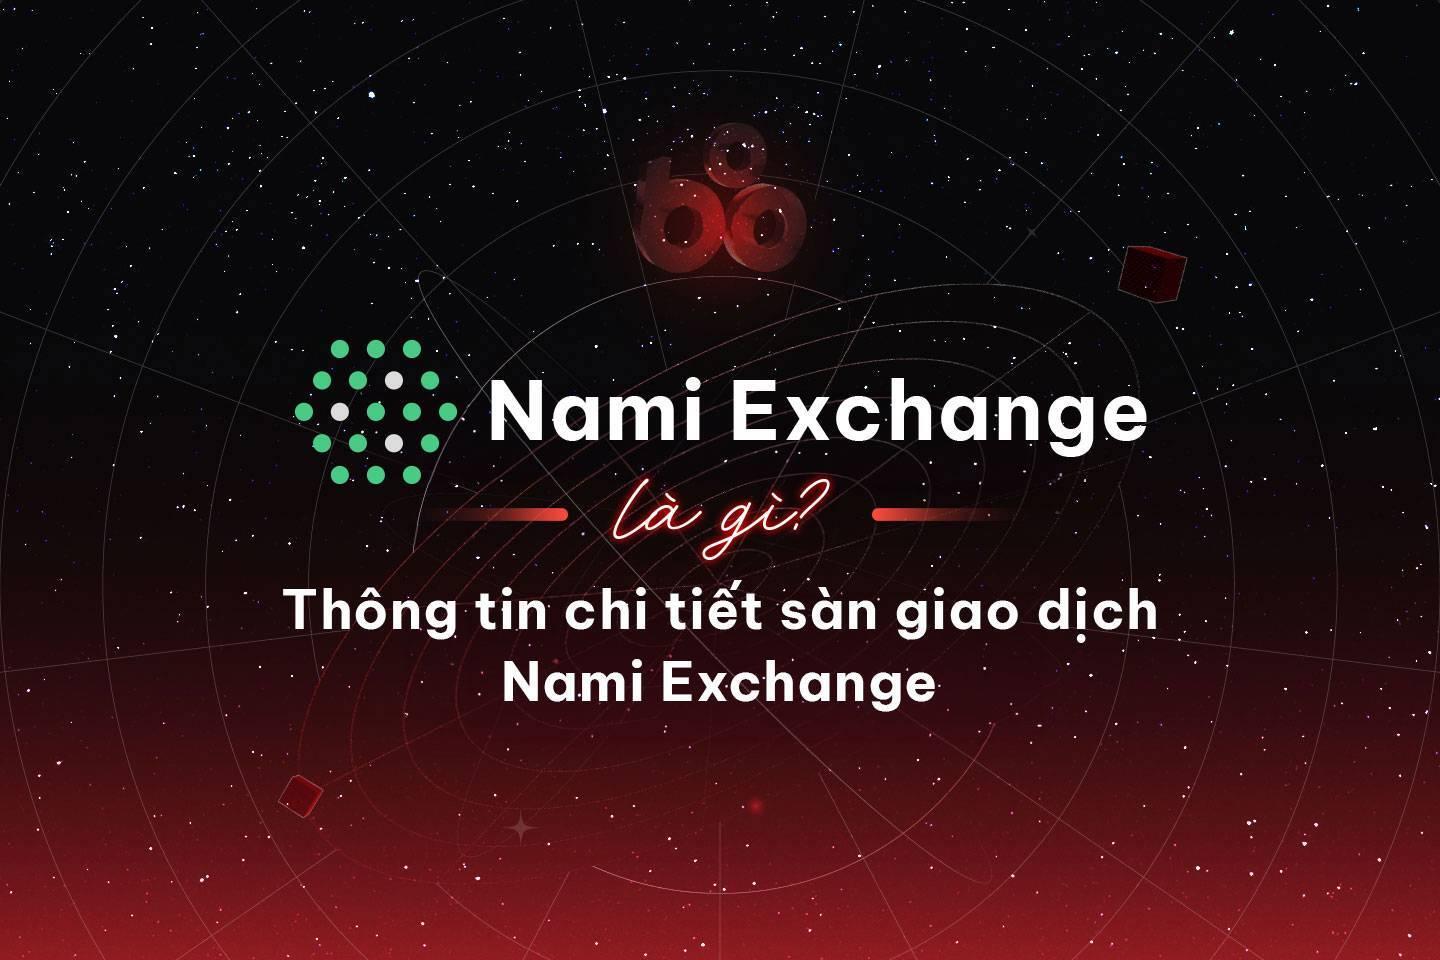 nami-exchange-la-gi-thong-tin-chi-tiet-san-giao-dich-nami-exchange